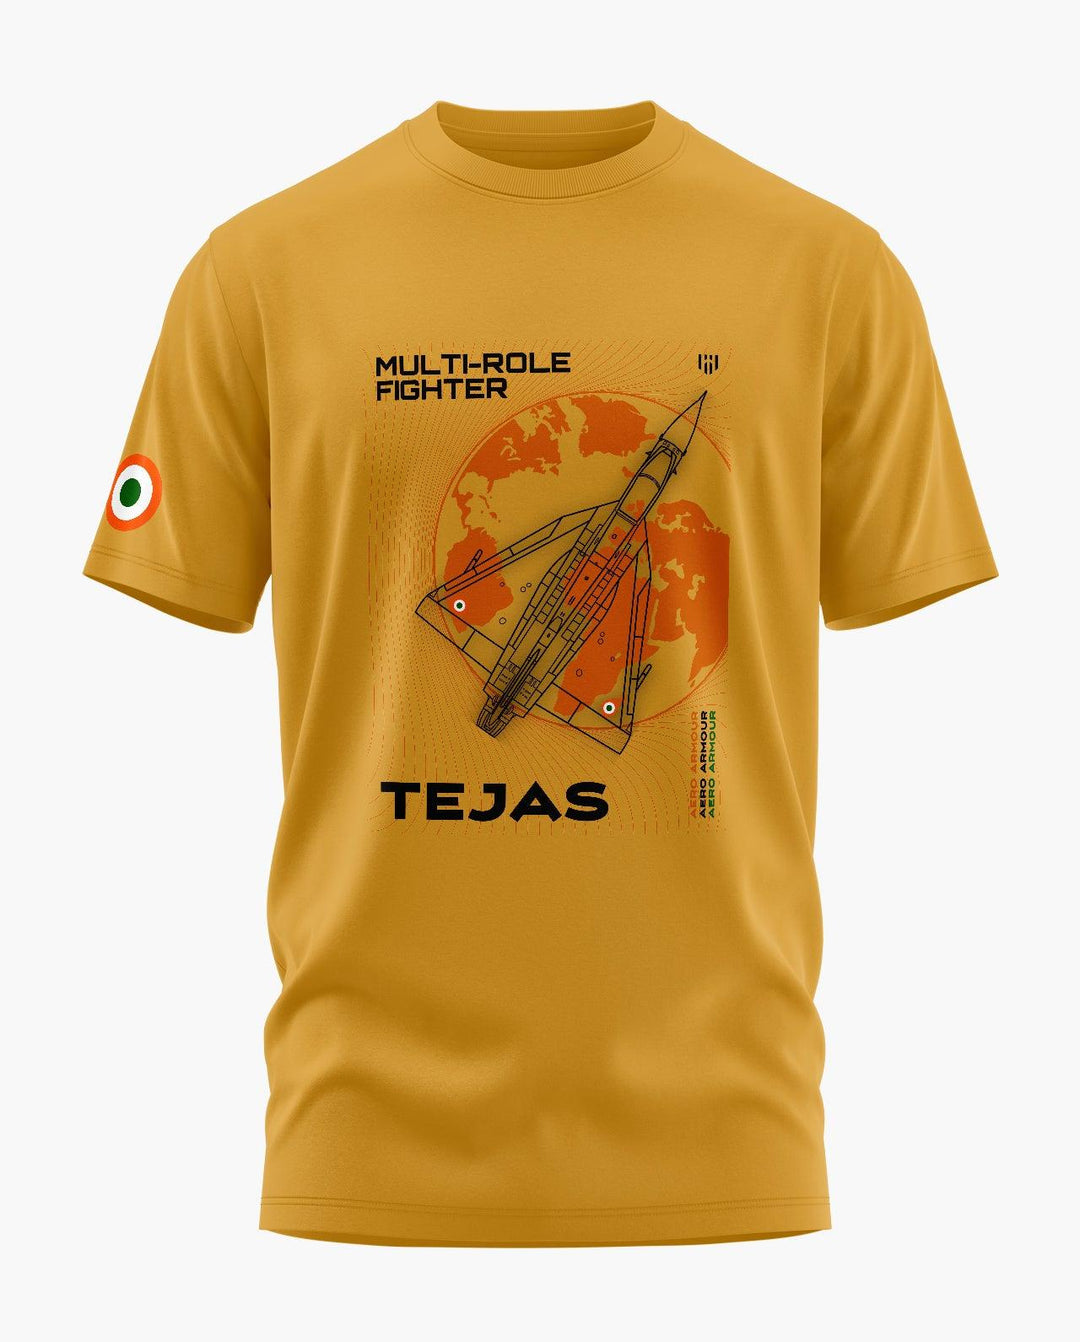 Tejas India T-Shirt - Aero Armour